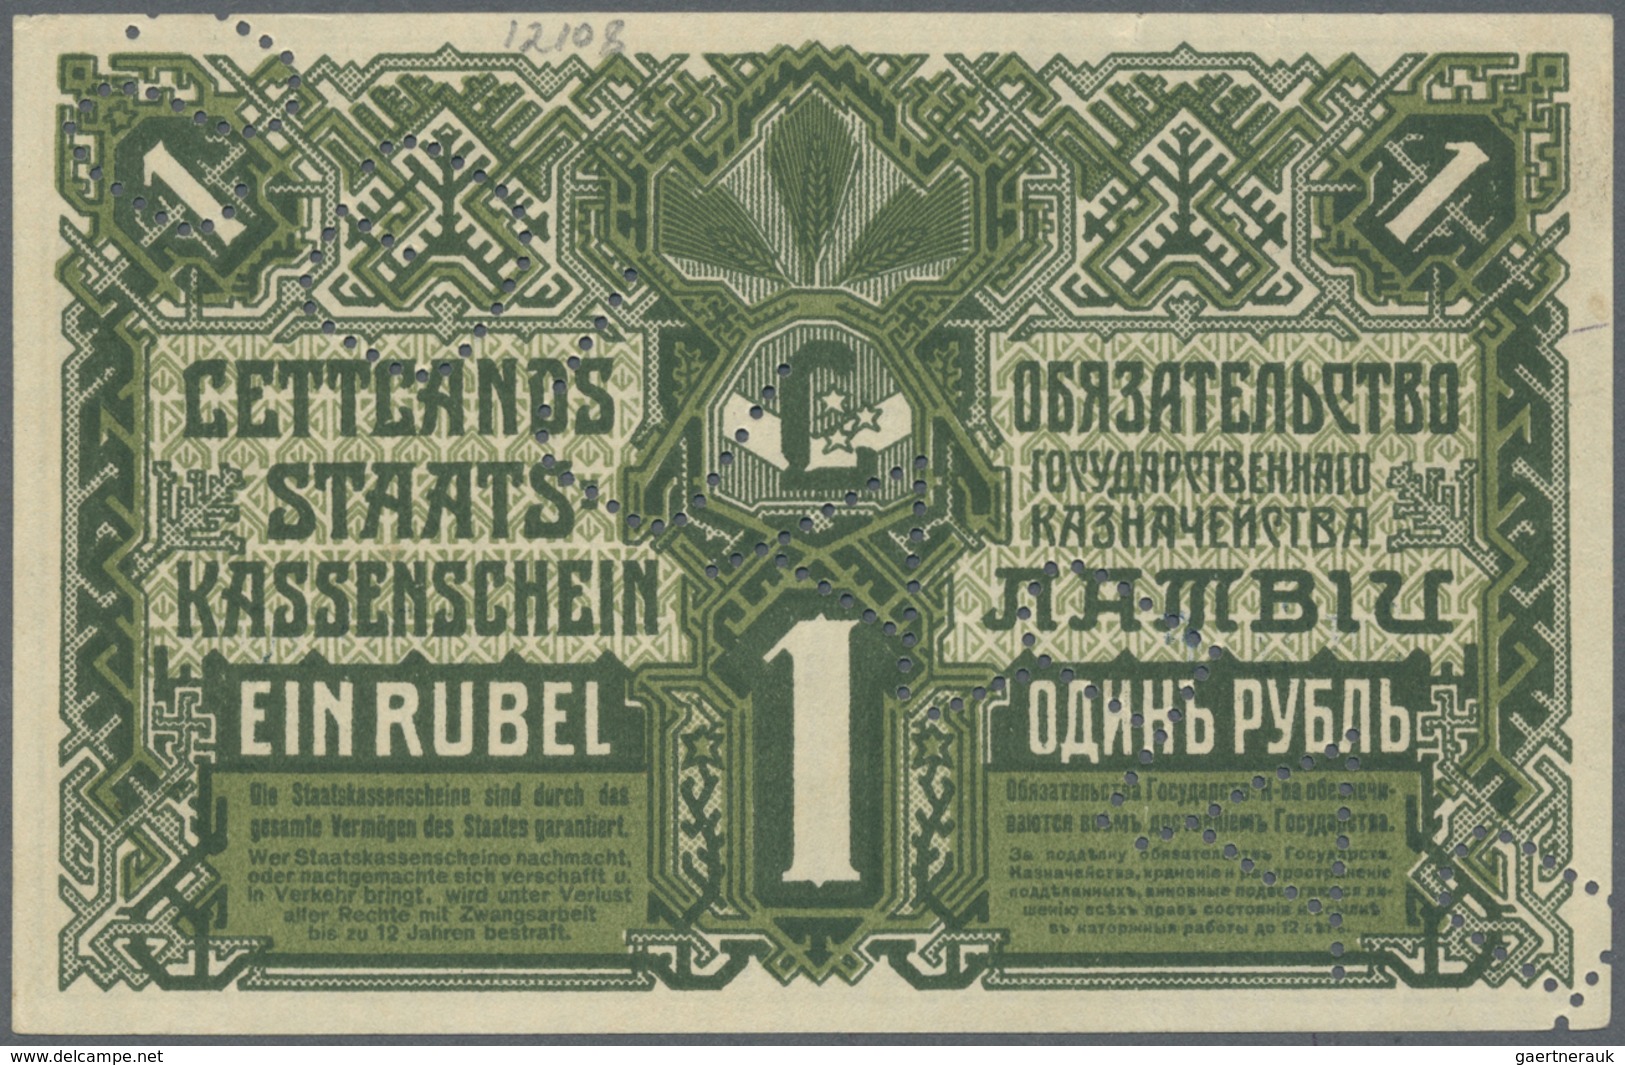 Latvia / Lettland: Rare Specimen Of 1 Rubli 1919 P. 2bs, Series "F" With Zero Serial Numbers, "PARAU - Lettonia